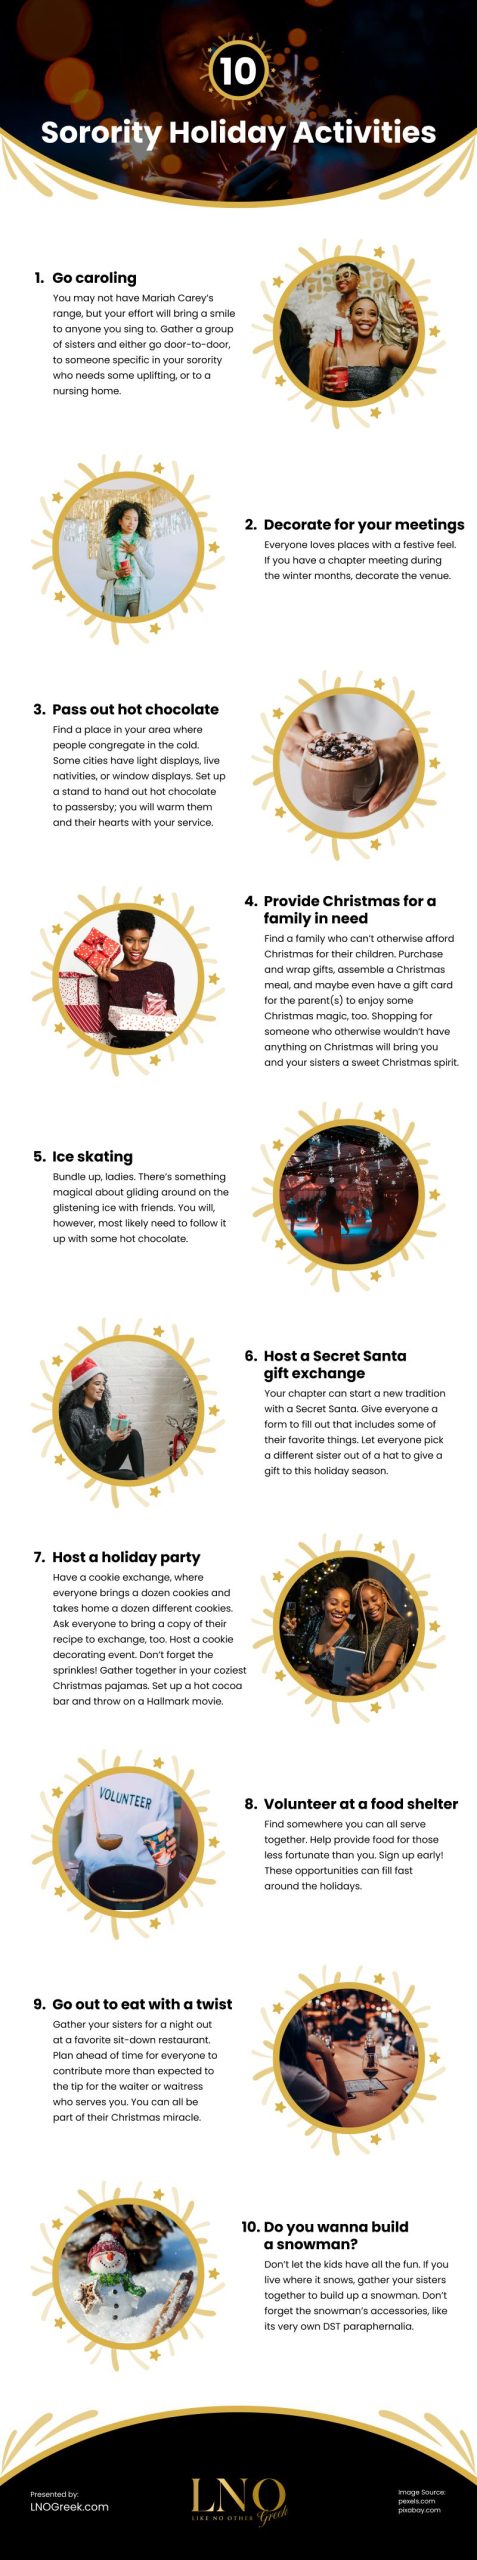 10 Sorority Holiday Activities Infographic